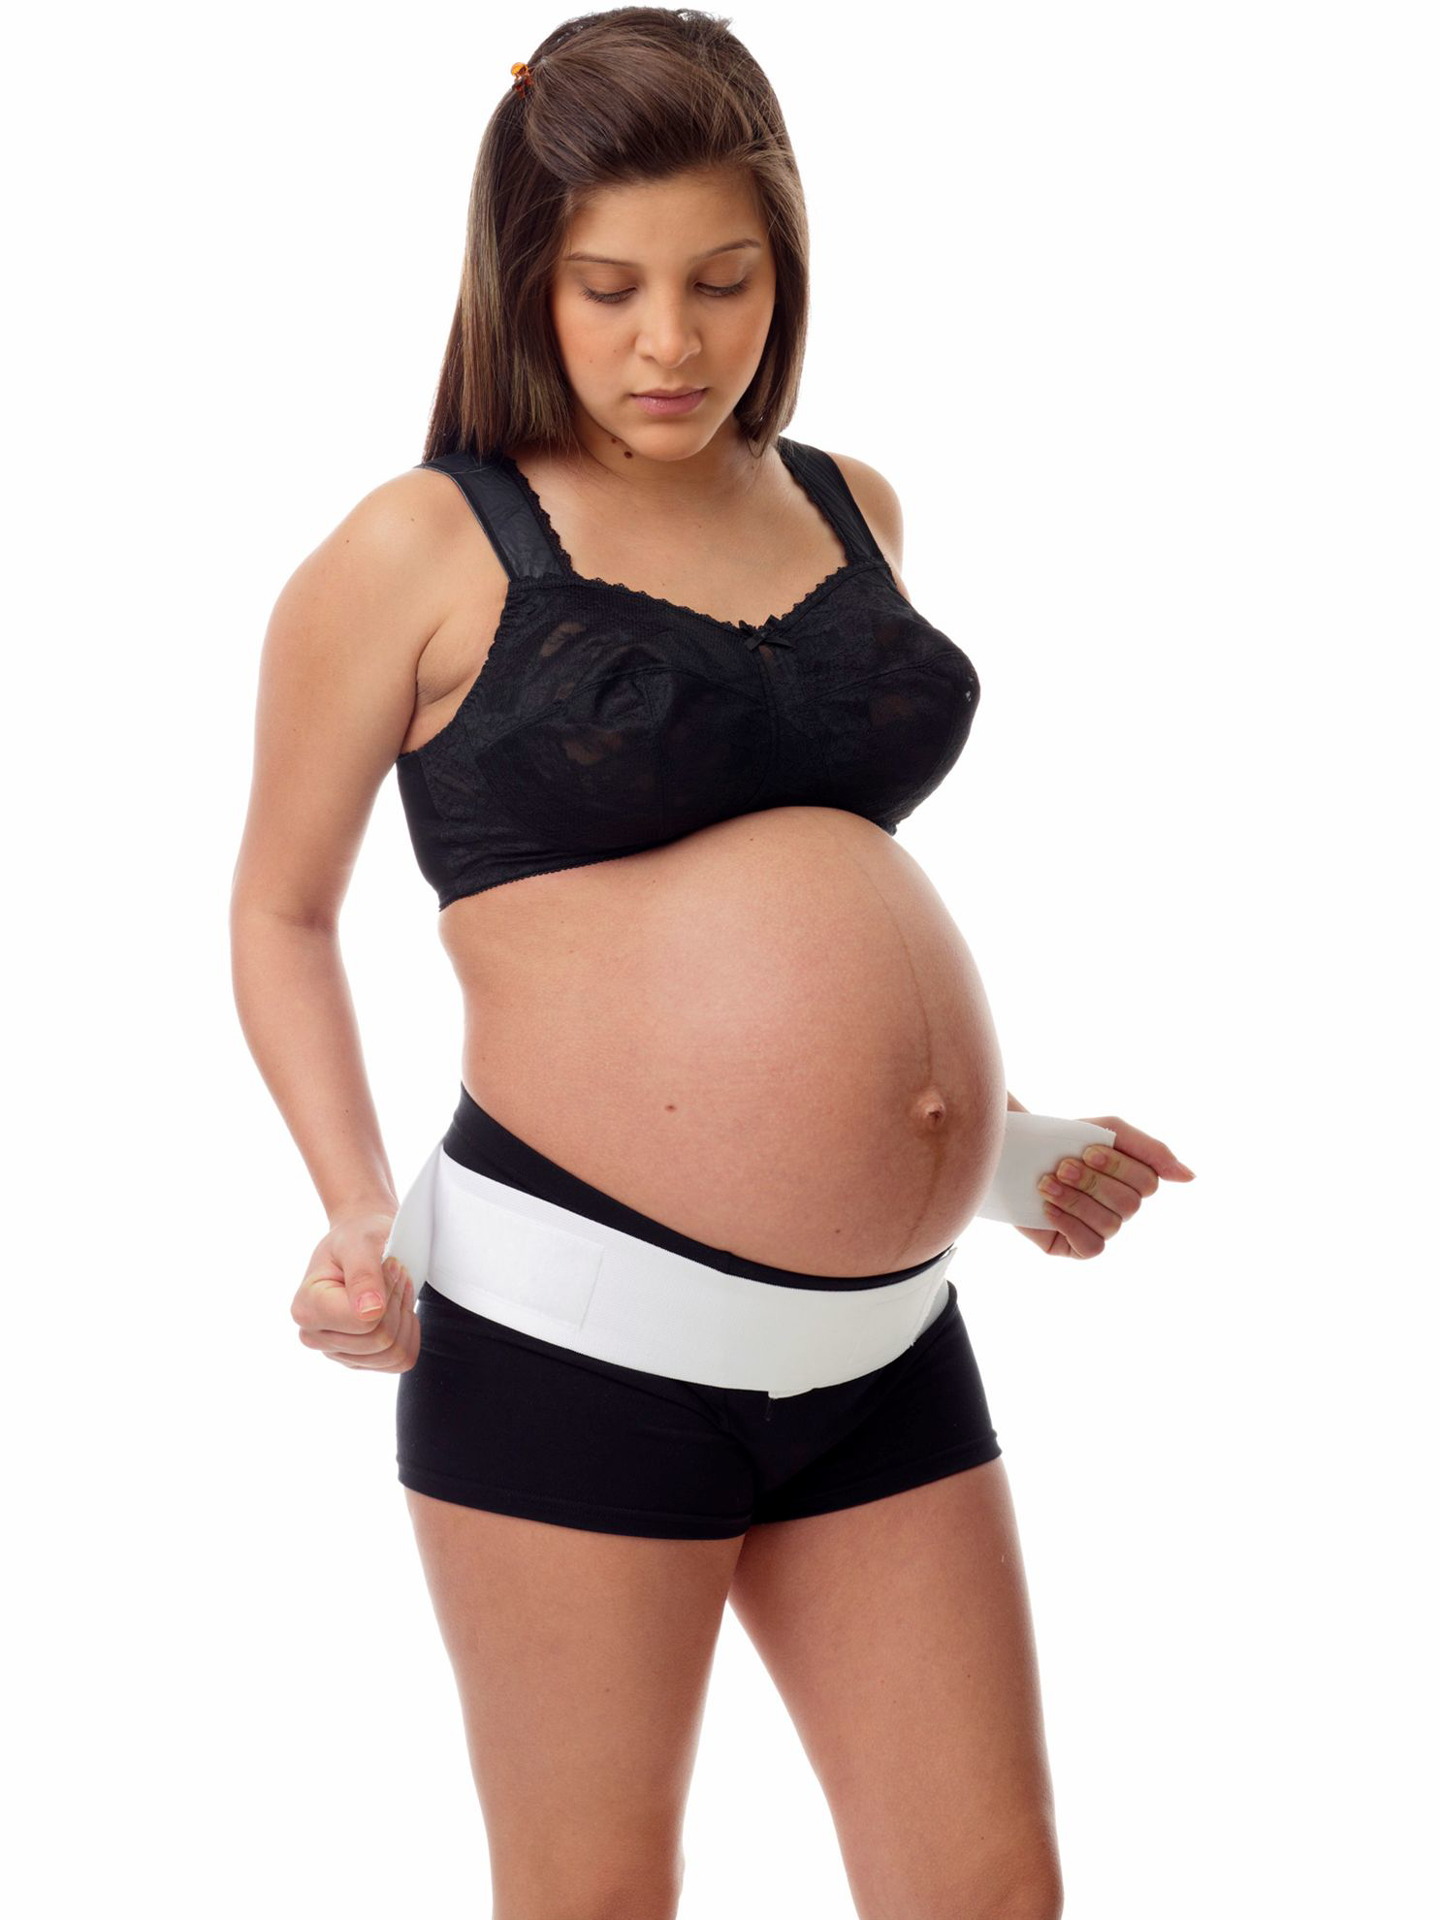 Ardyss Mopostpartum Body Wrap For Flat Tummy After Childbirth